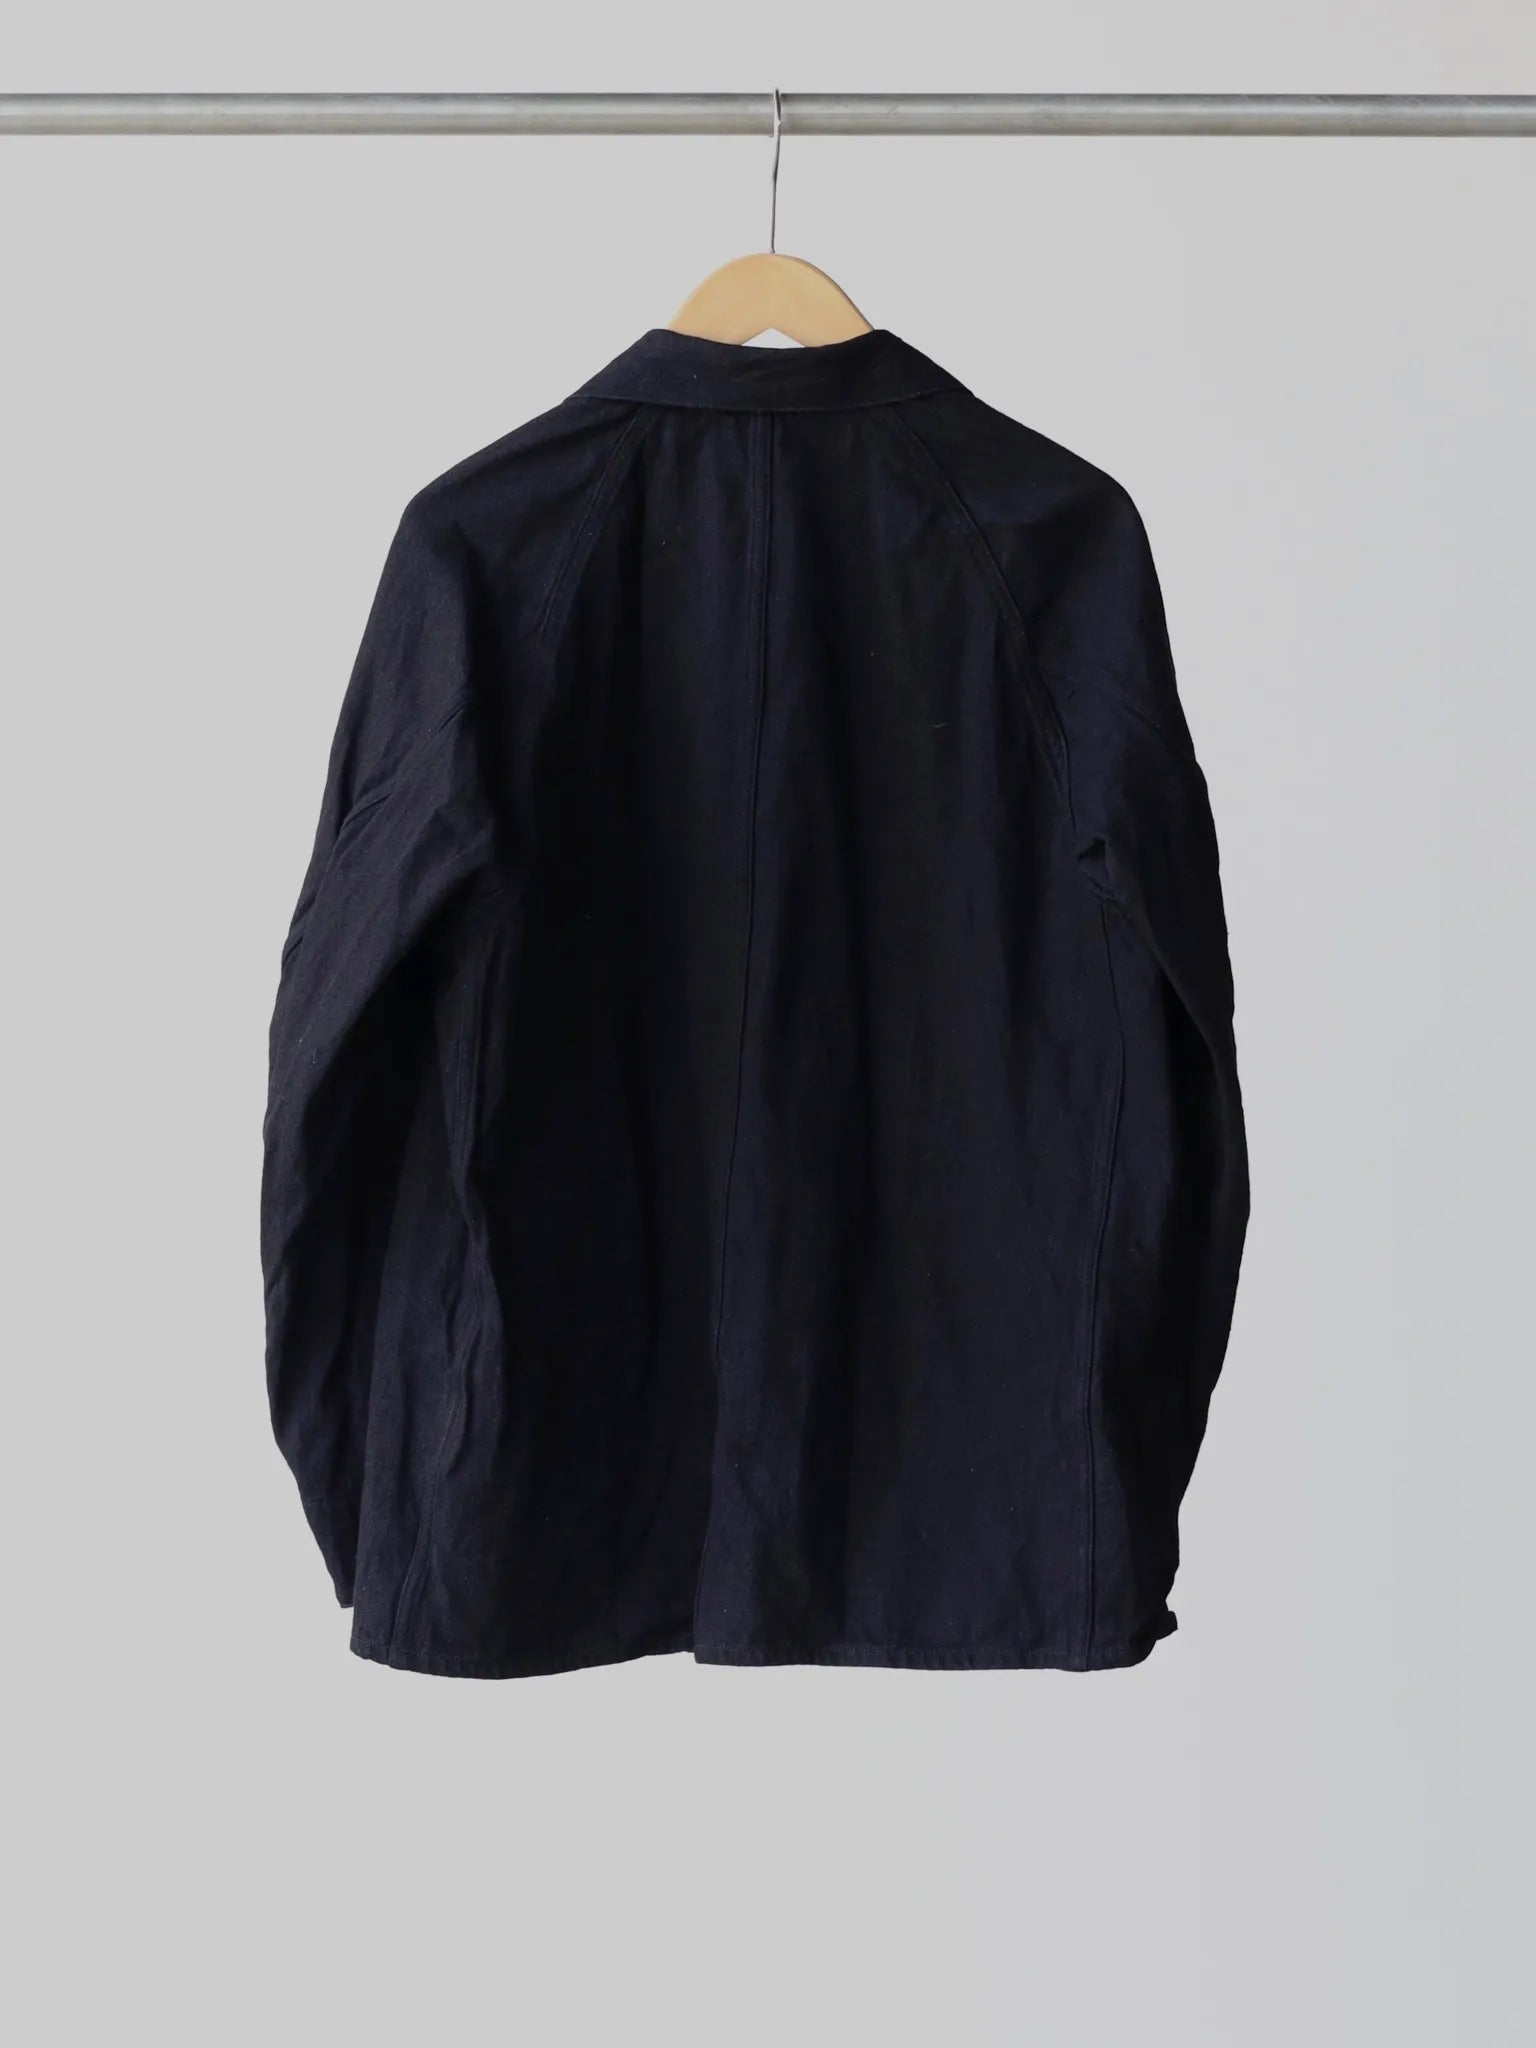 comoli-denim-work-jacket-black-2